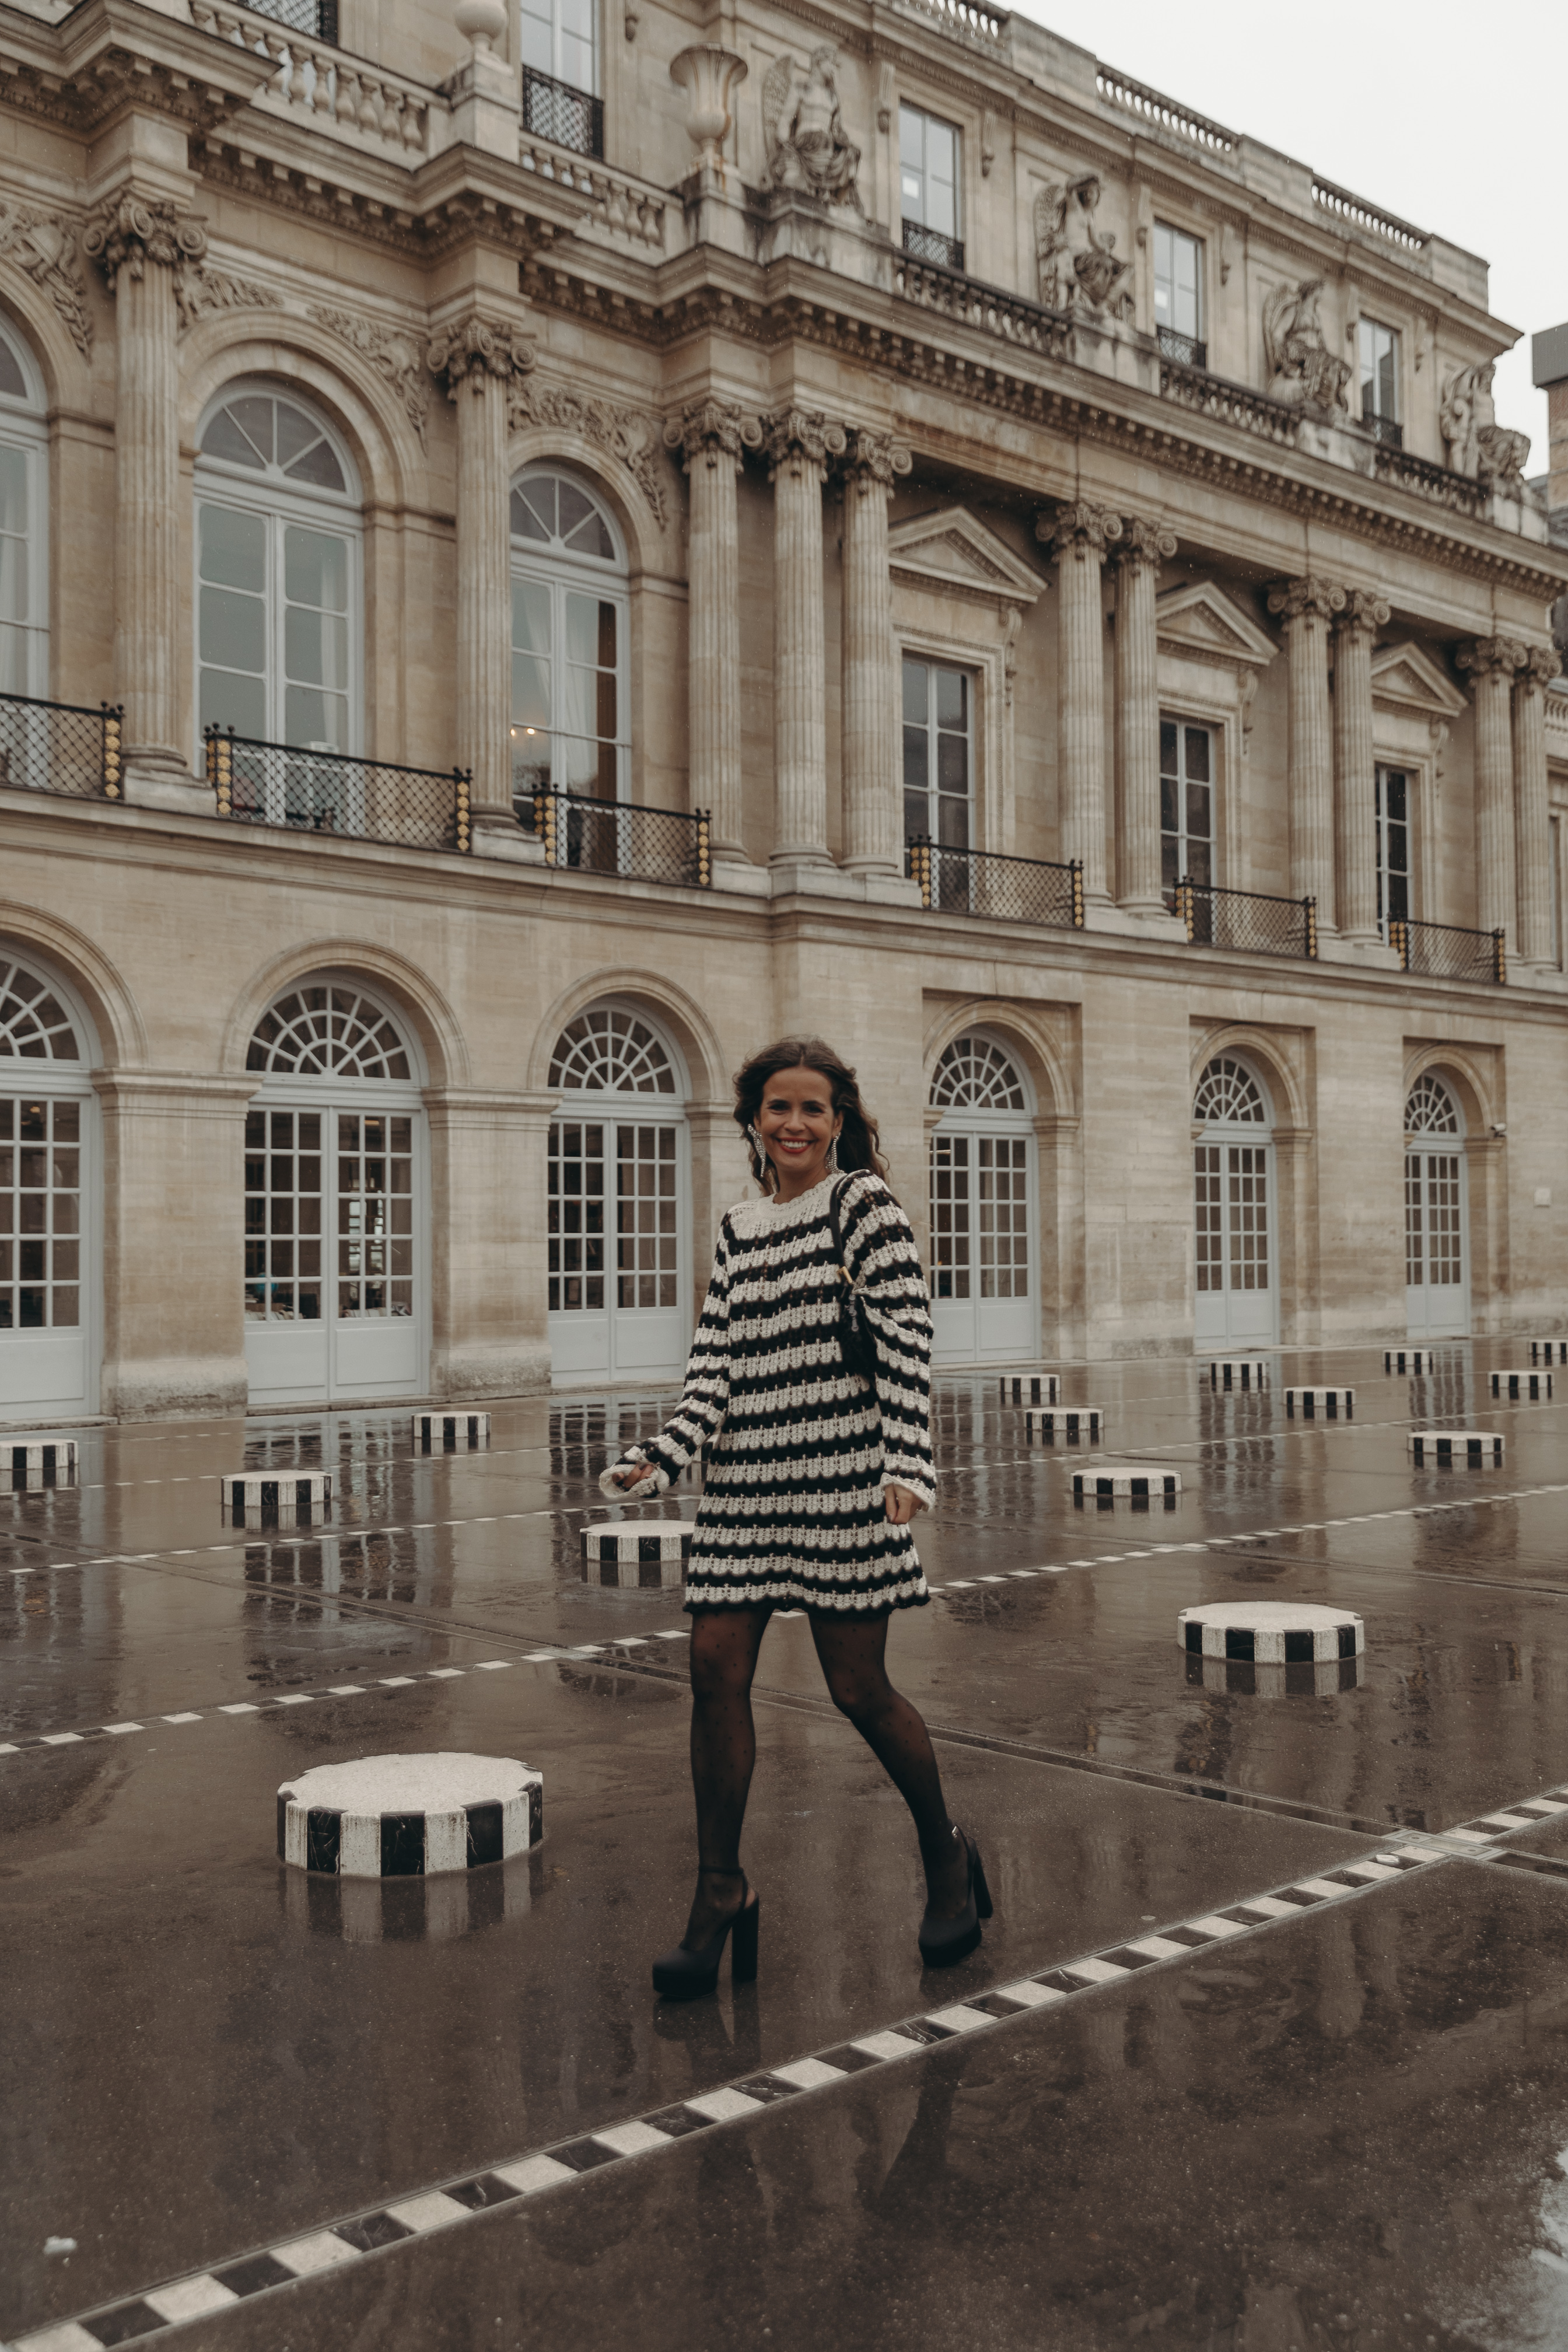 Sara from Collage Vintage at Paris Fashion Week. Wearing a striped knit long sweater, Fendi vintage bag and platform sandals.